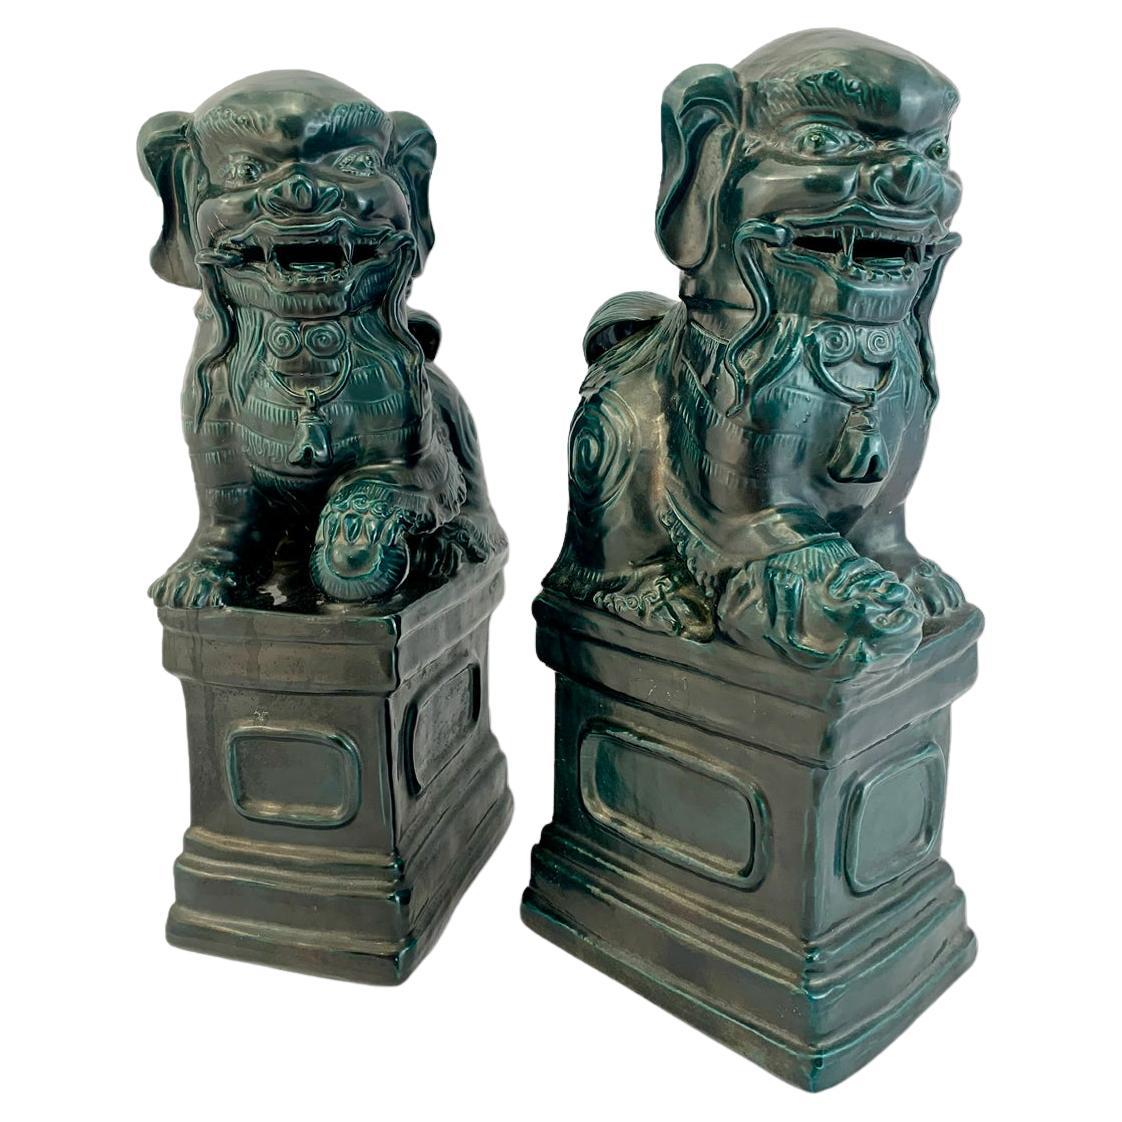 Pho-Hunde aus Keramik des frühen 20. Jahrhunderts